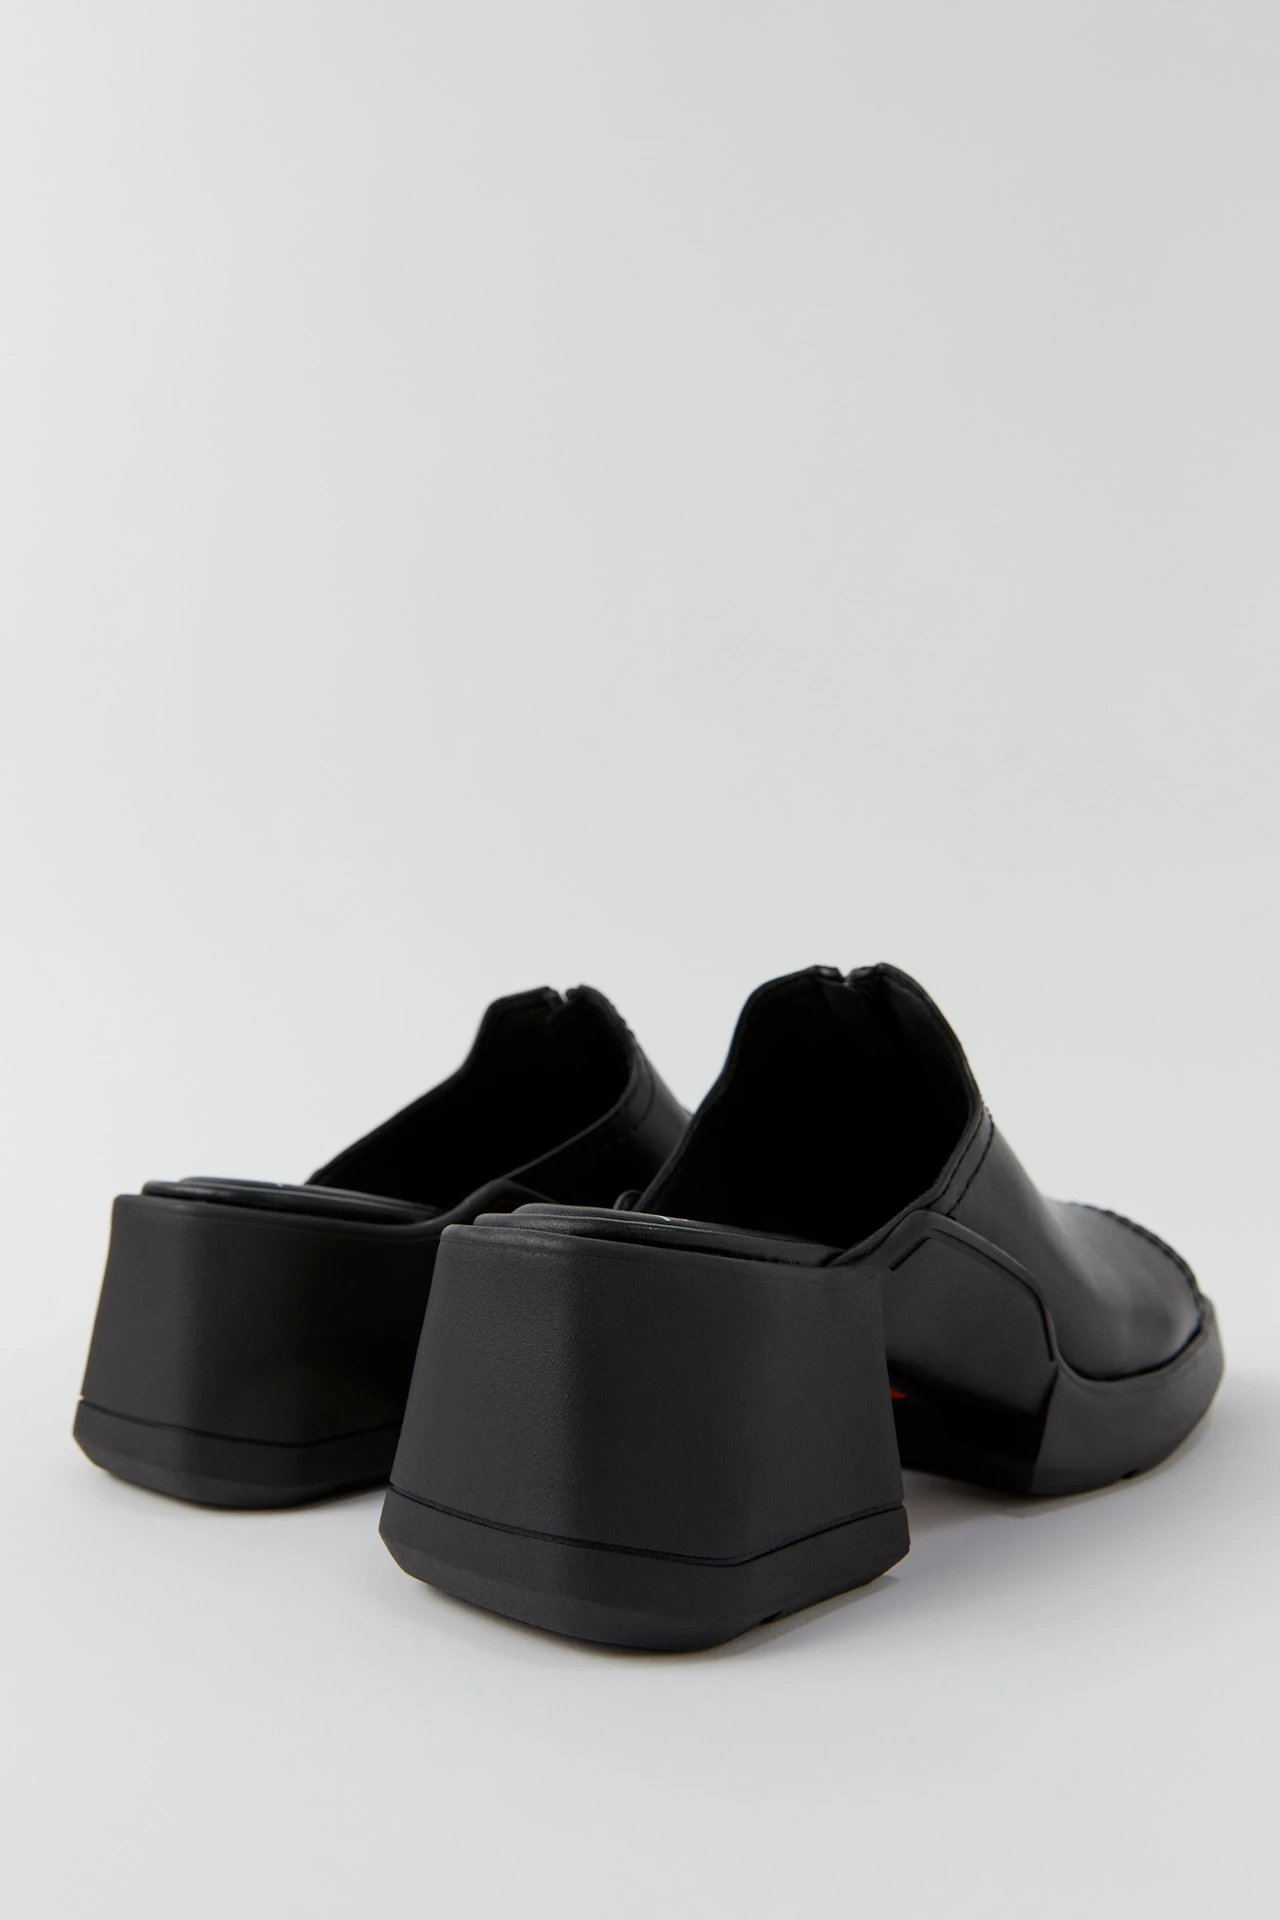 E8-bertie-black-sandals-03